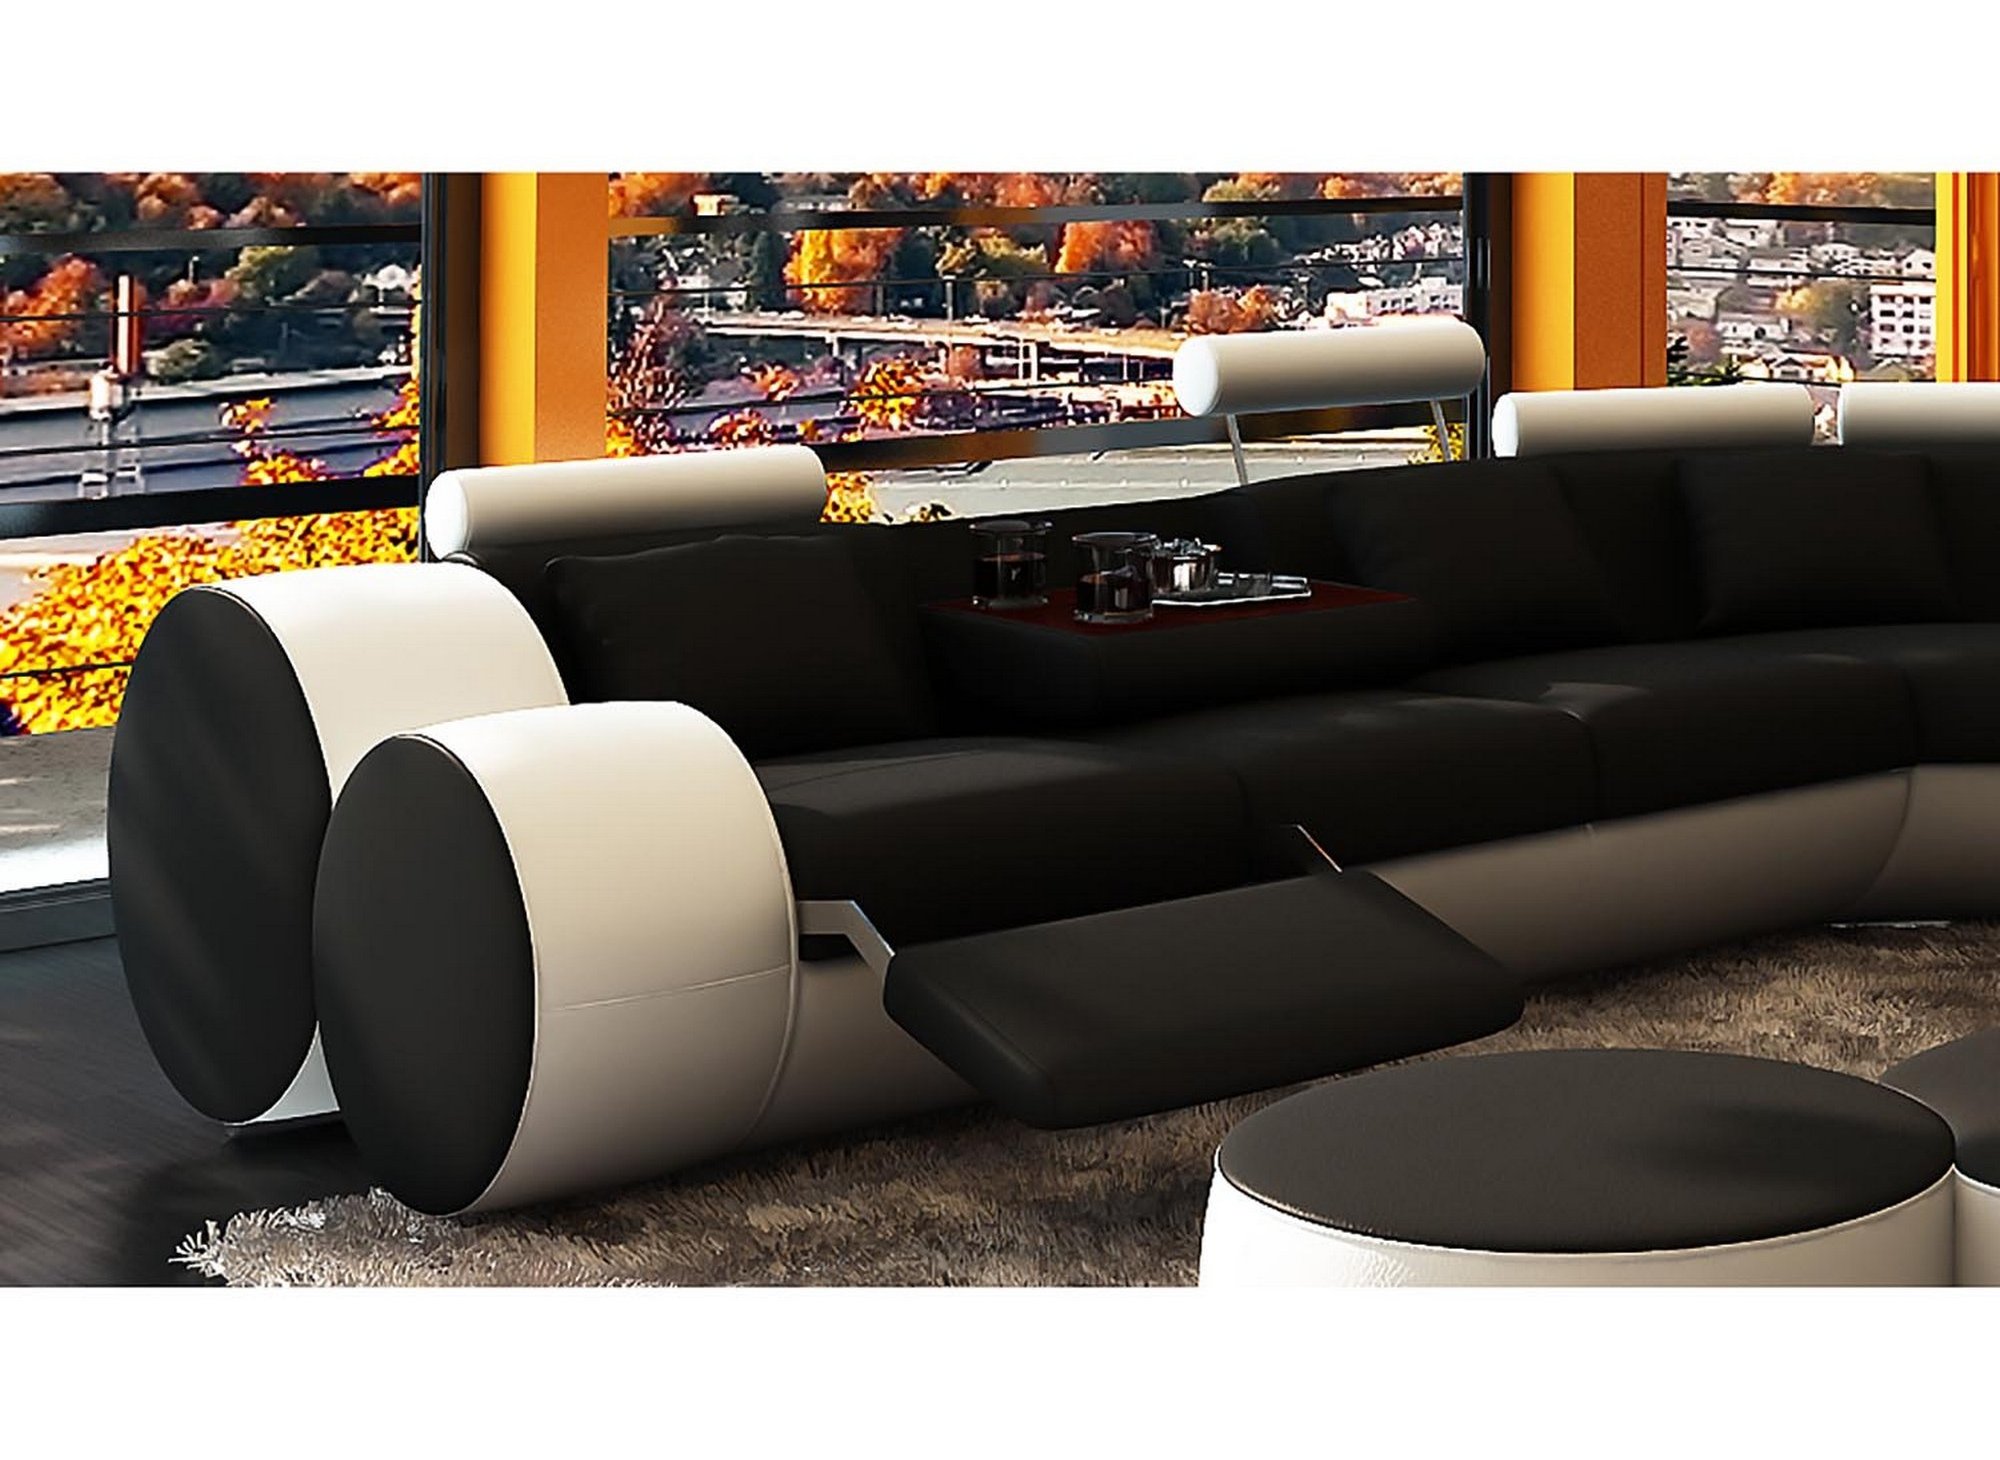 Canapé d'angle cuir noir et blanc + positions relax ROMA - Angle Droit